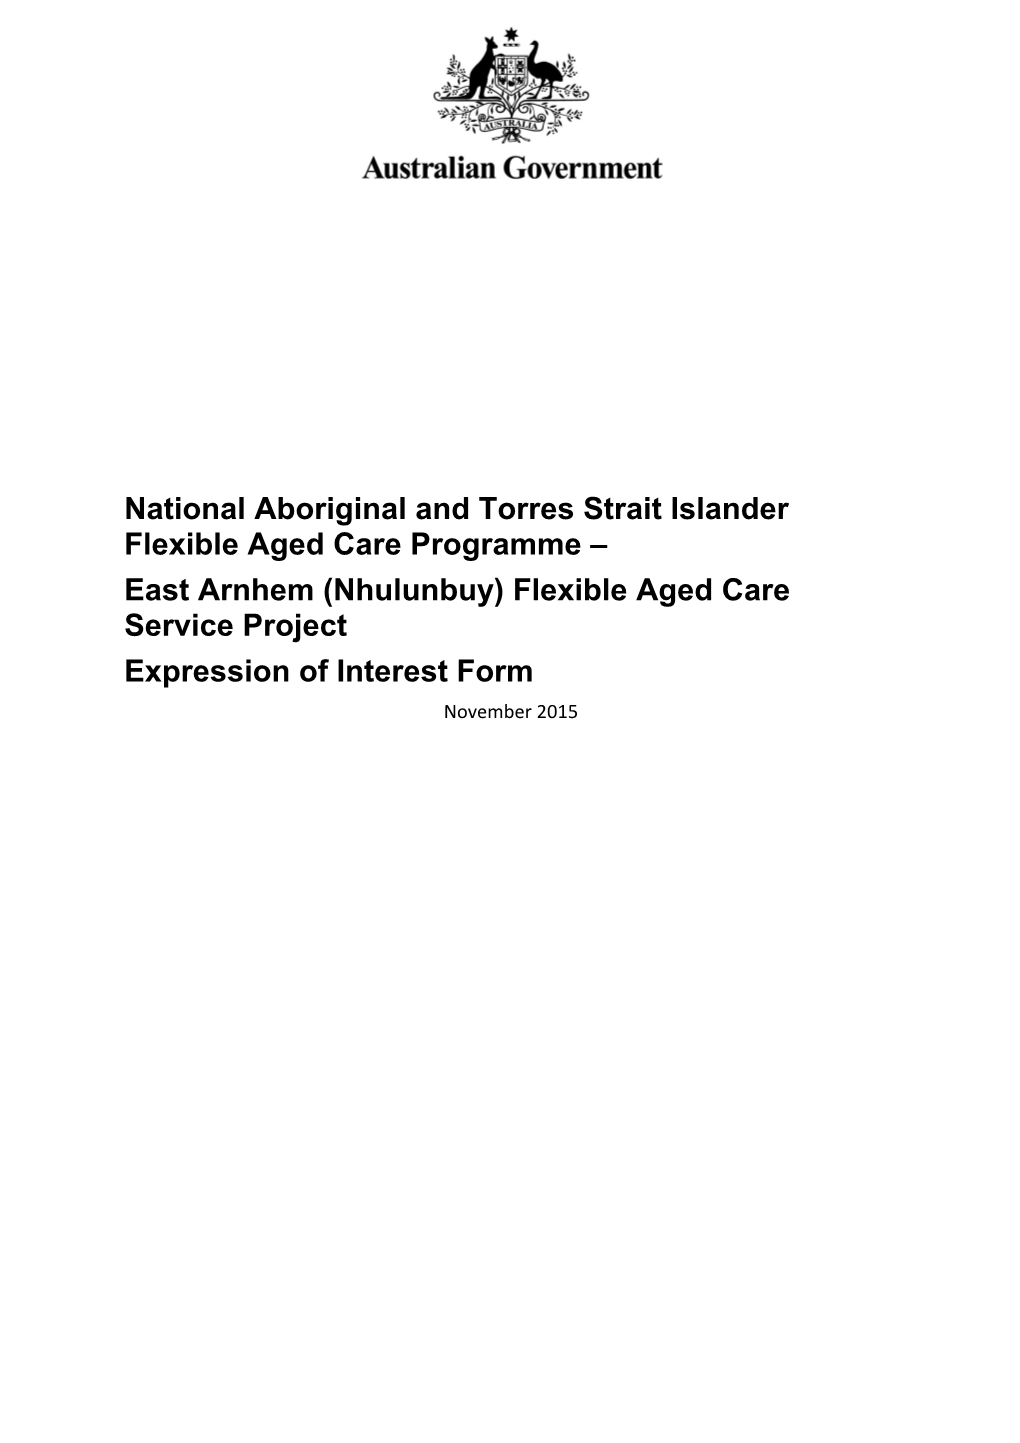 National Aboriginal and Torres Strait Islander Flexible Aged Care Programme